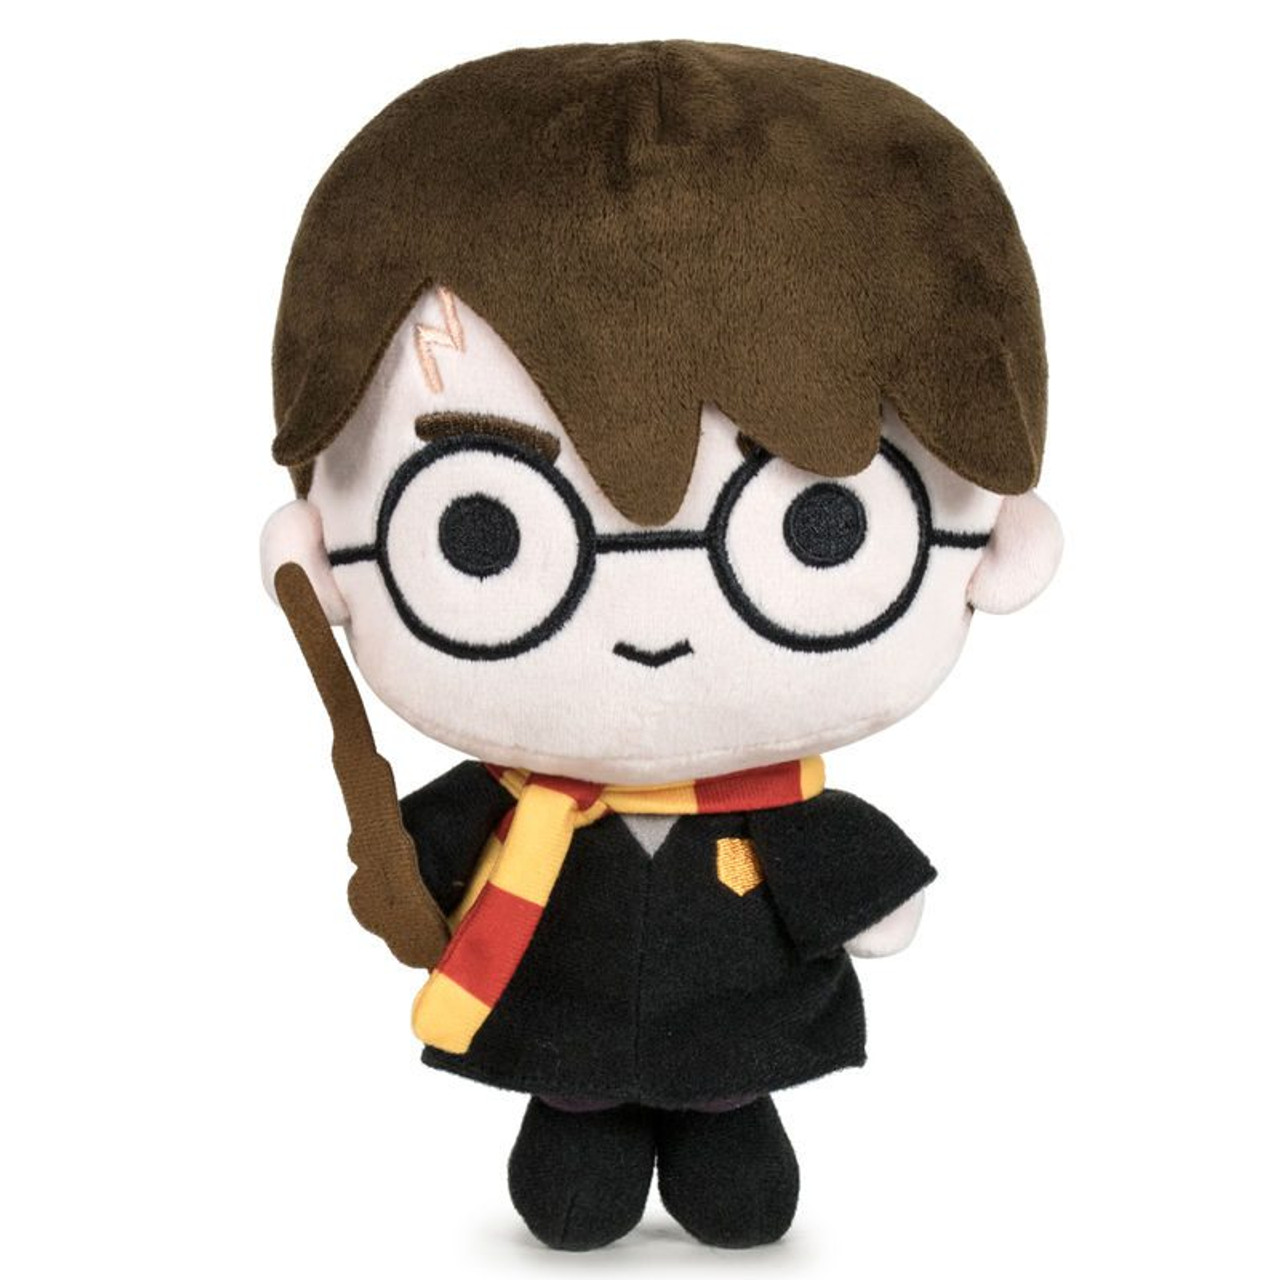 Harry Potter Malfoy plush